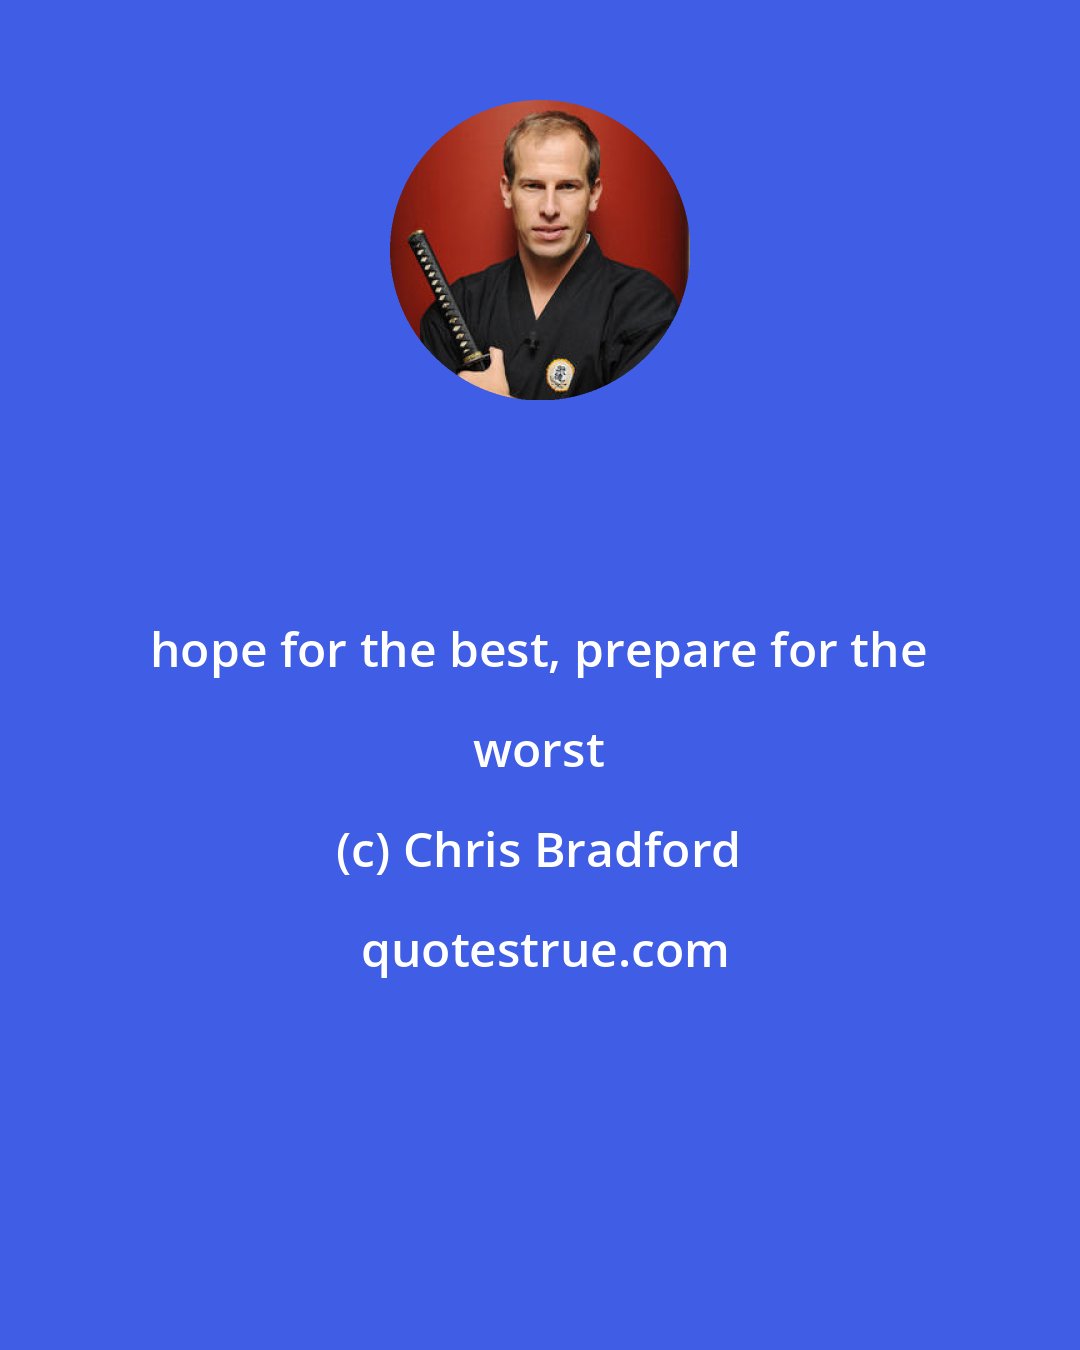 Chris Bradford: hope for the best, prepare for the worst